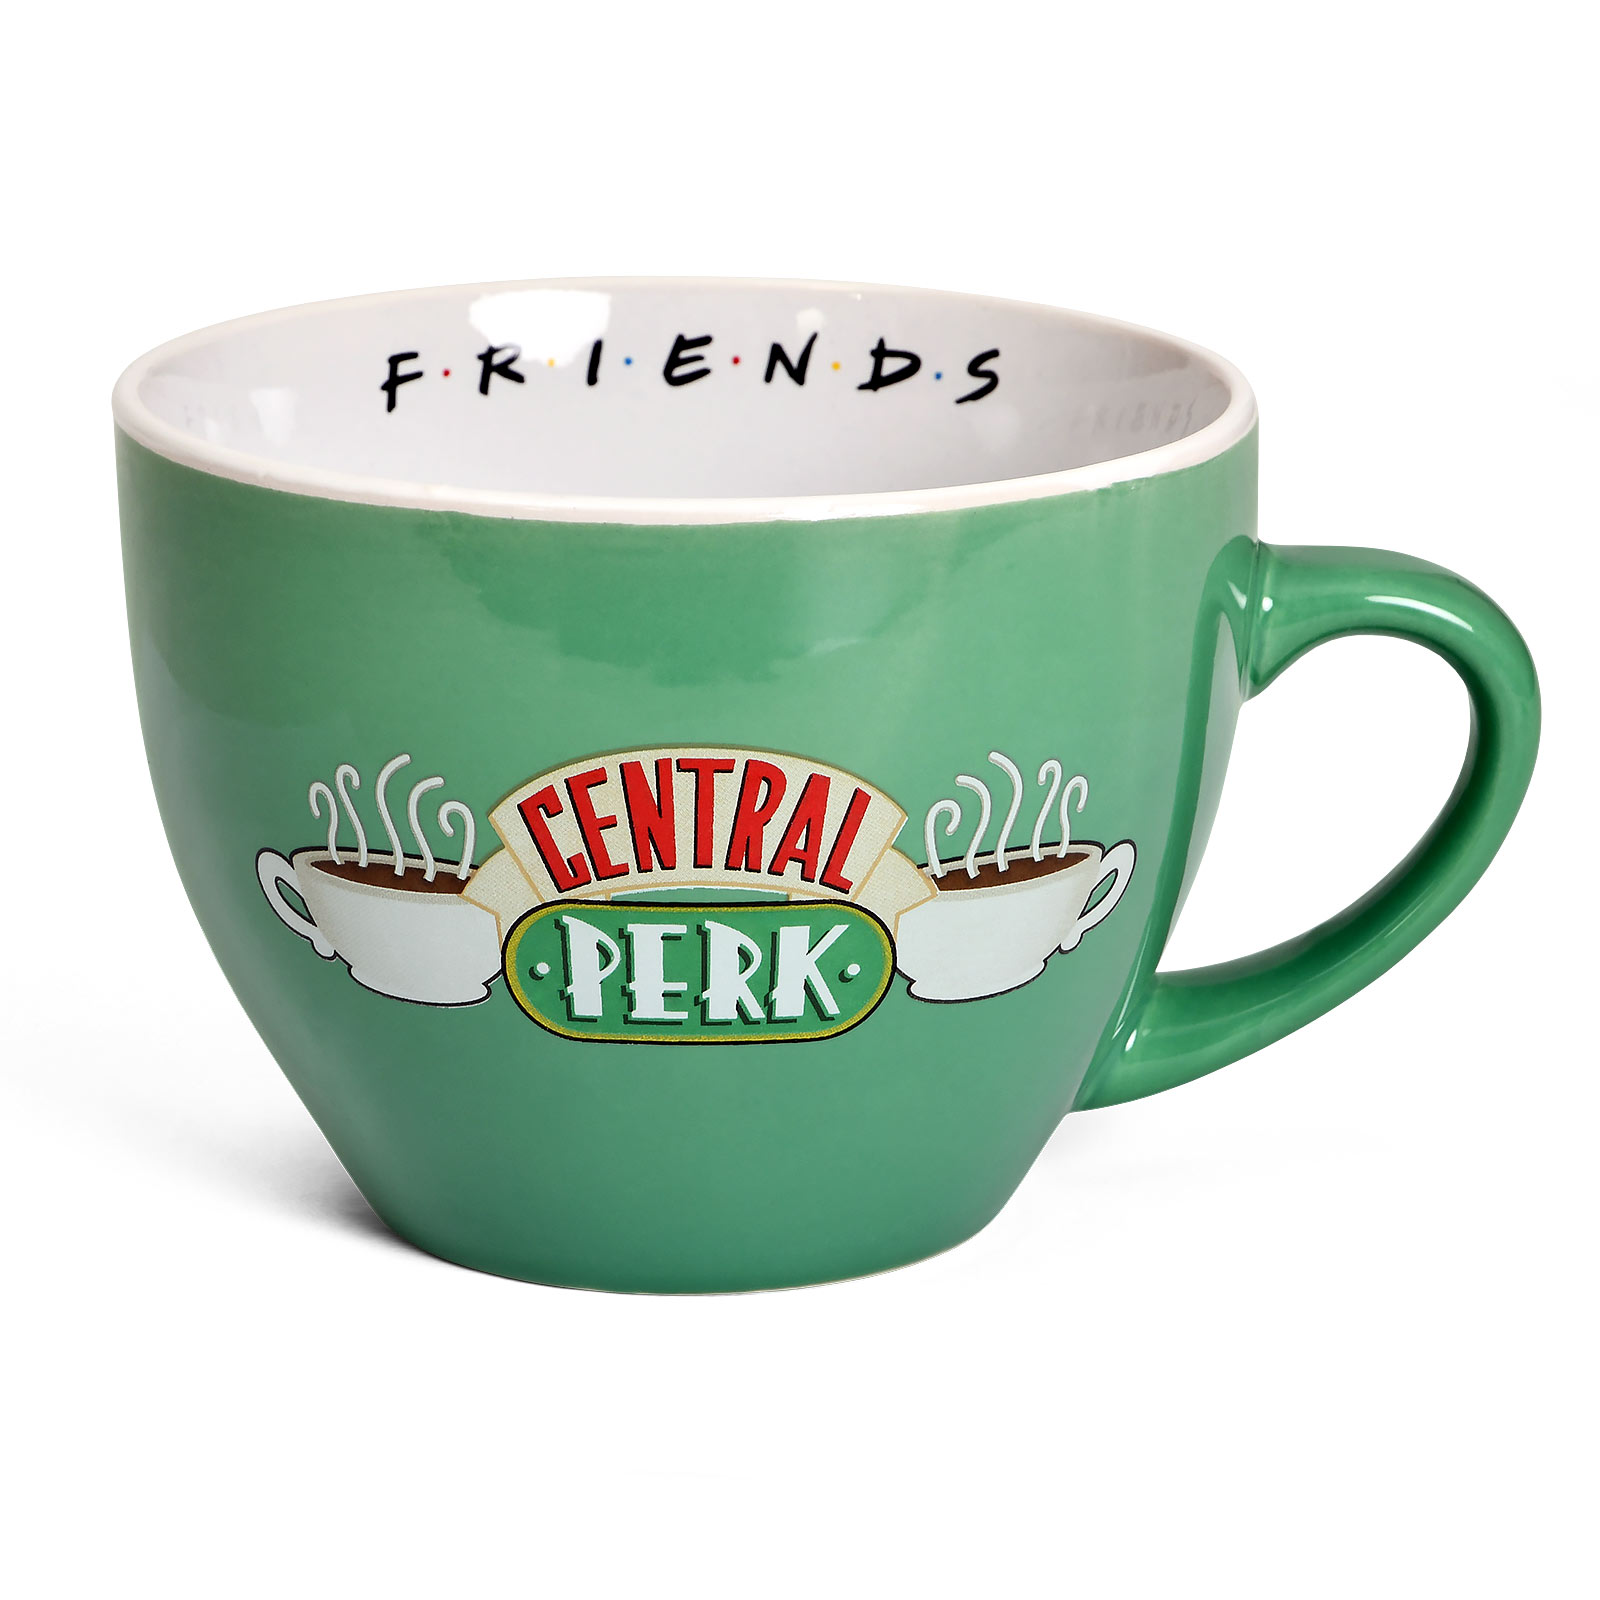 Friends - Central Perk Mug with Stencil